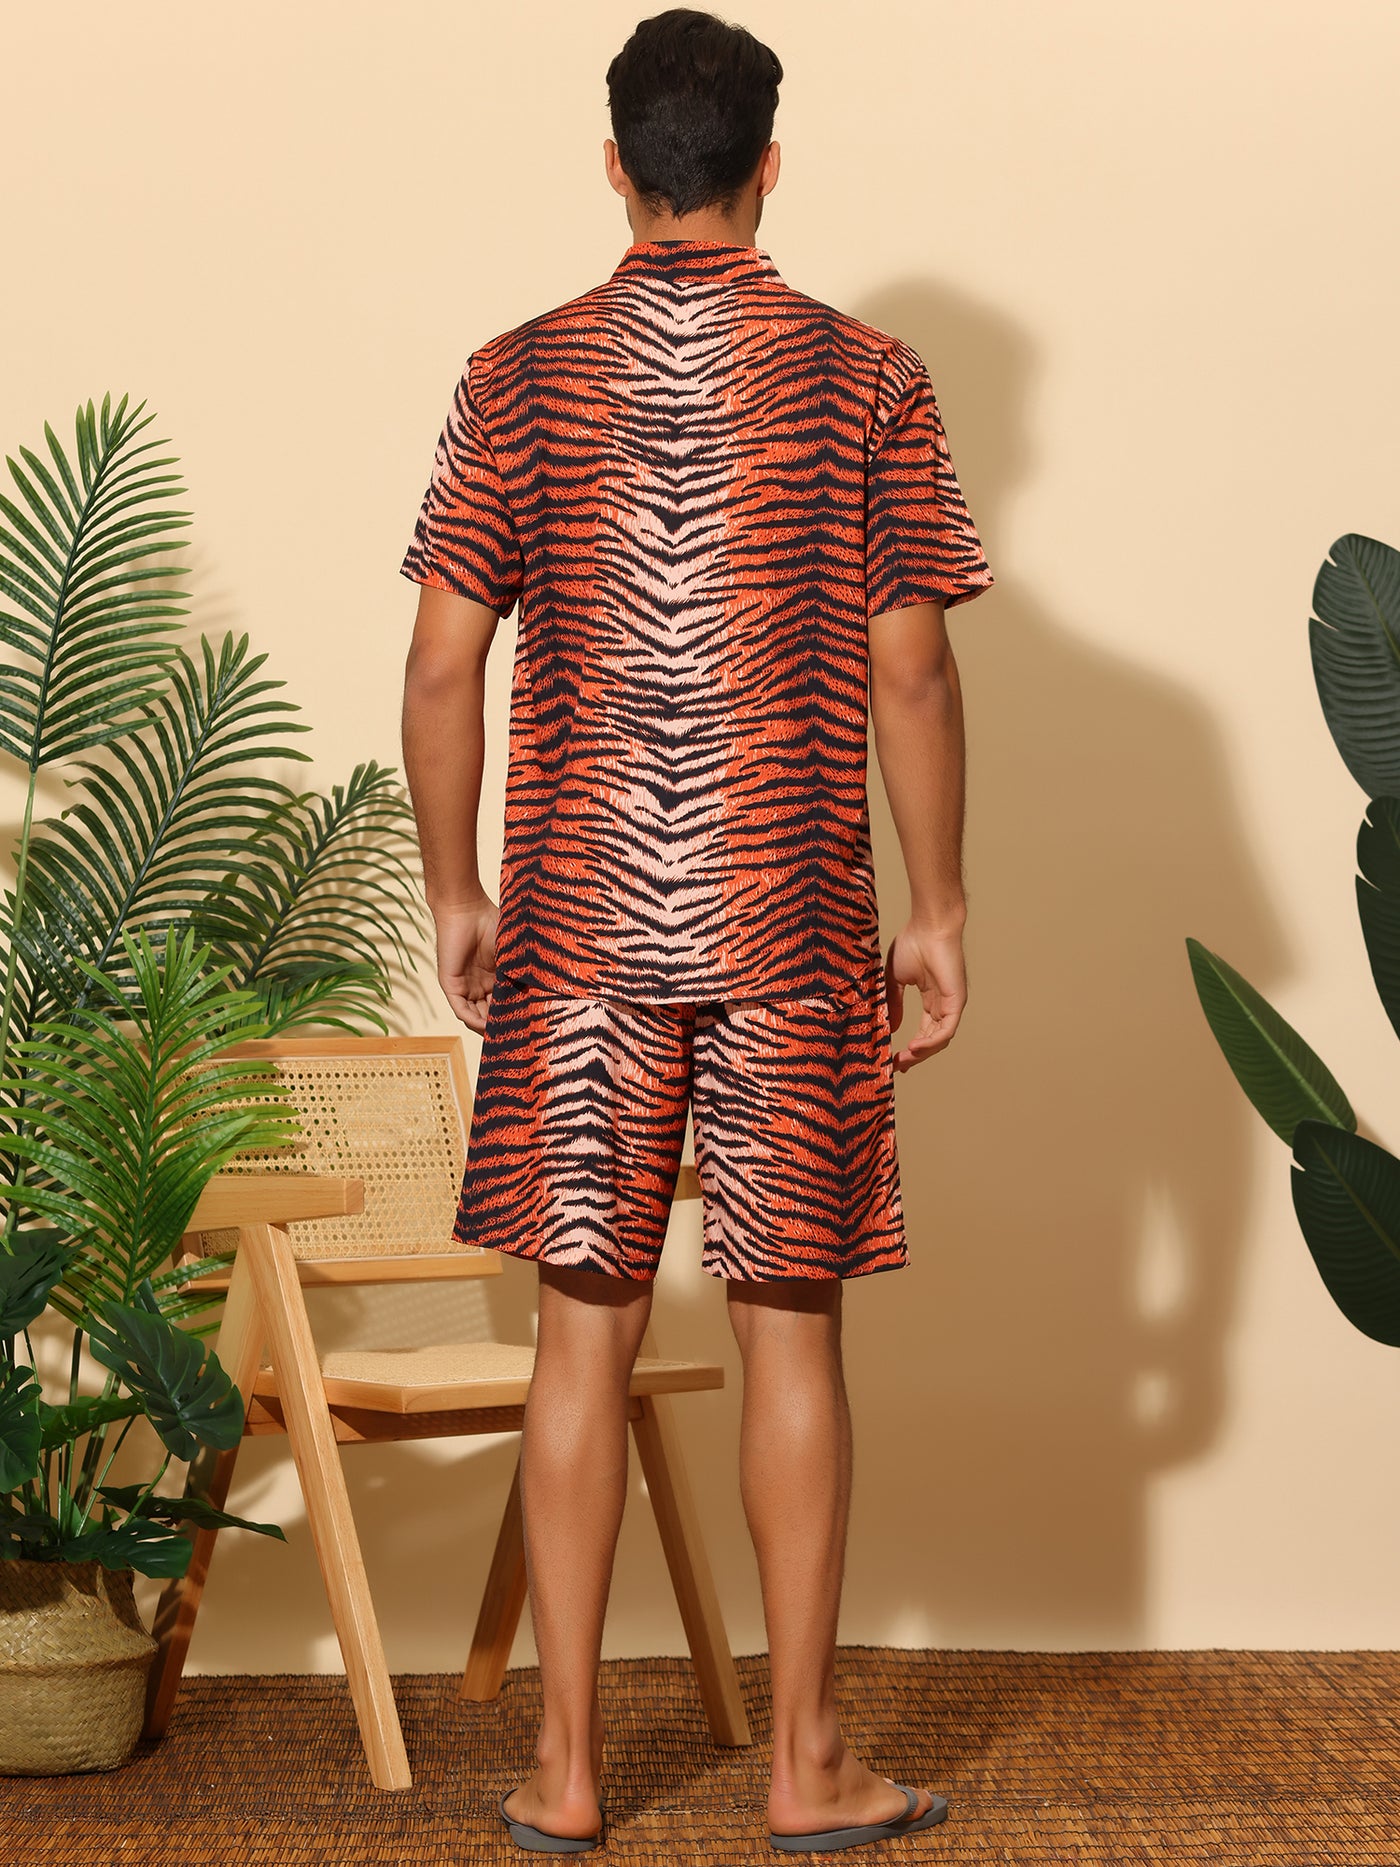 Bublédon Animal Printed Shirts for Men's Short Sleeves Hawaiian Set 2 Pieces Summer Outfit